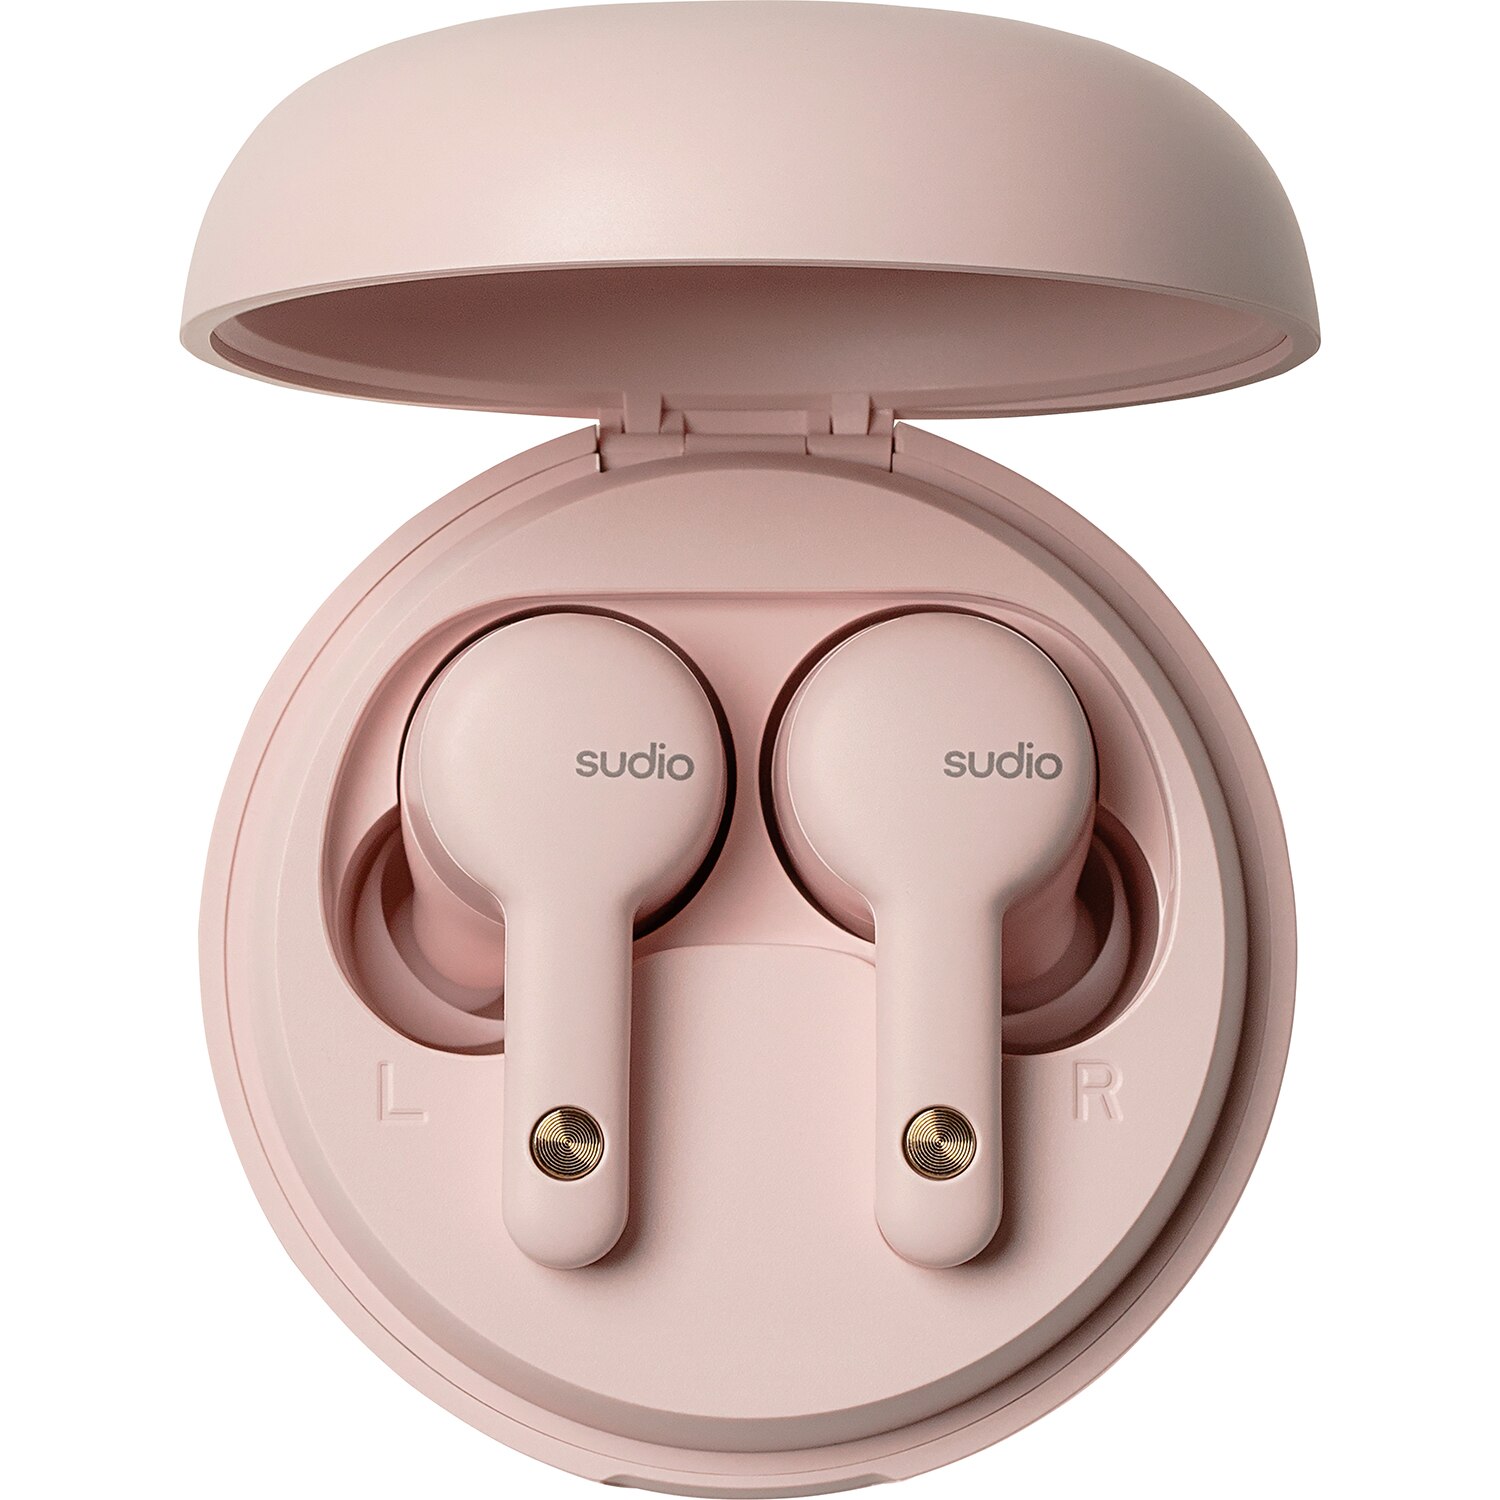 Sudio A2 True Wireless Earbuds, Pink